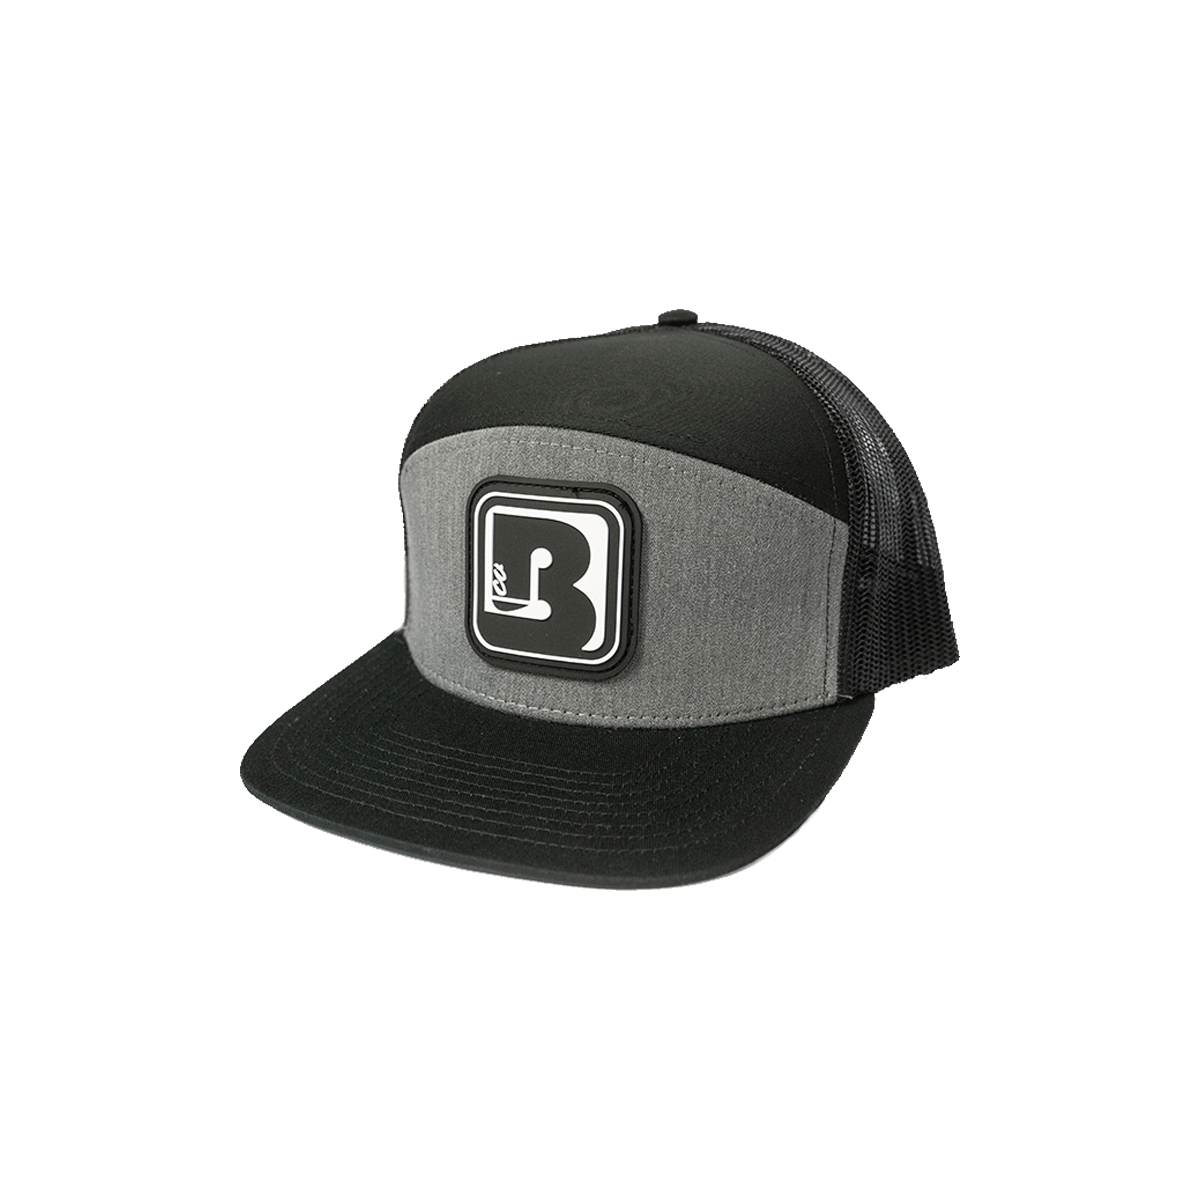 BoardCo Cobra Hat Grey/Black with B Patch - BoardCo